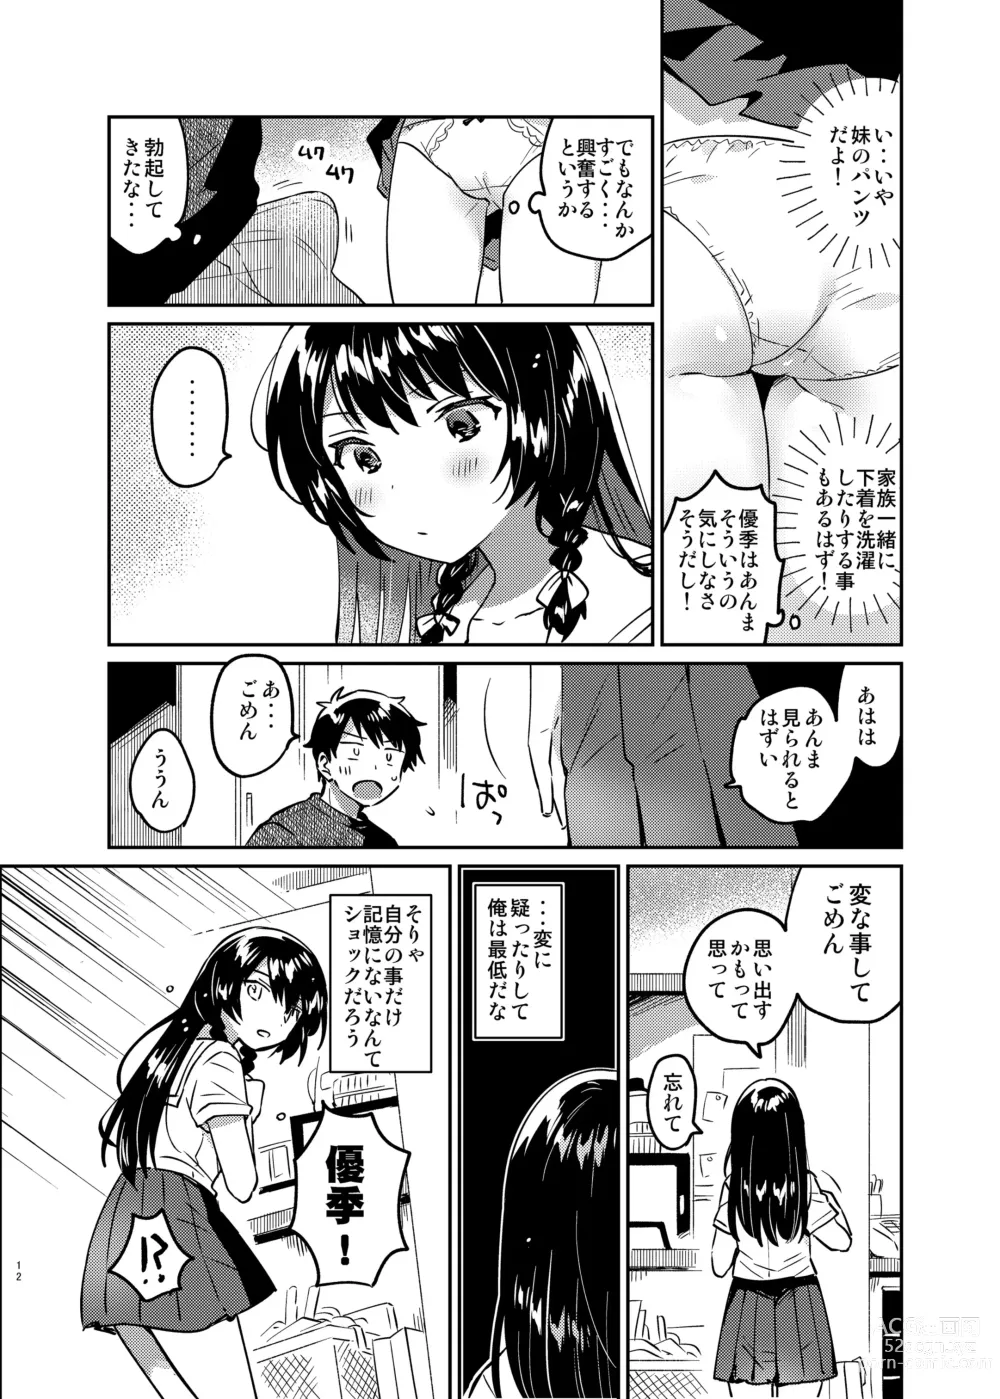 Page 11 of doujinshi Onii-chan wa Amnesia